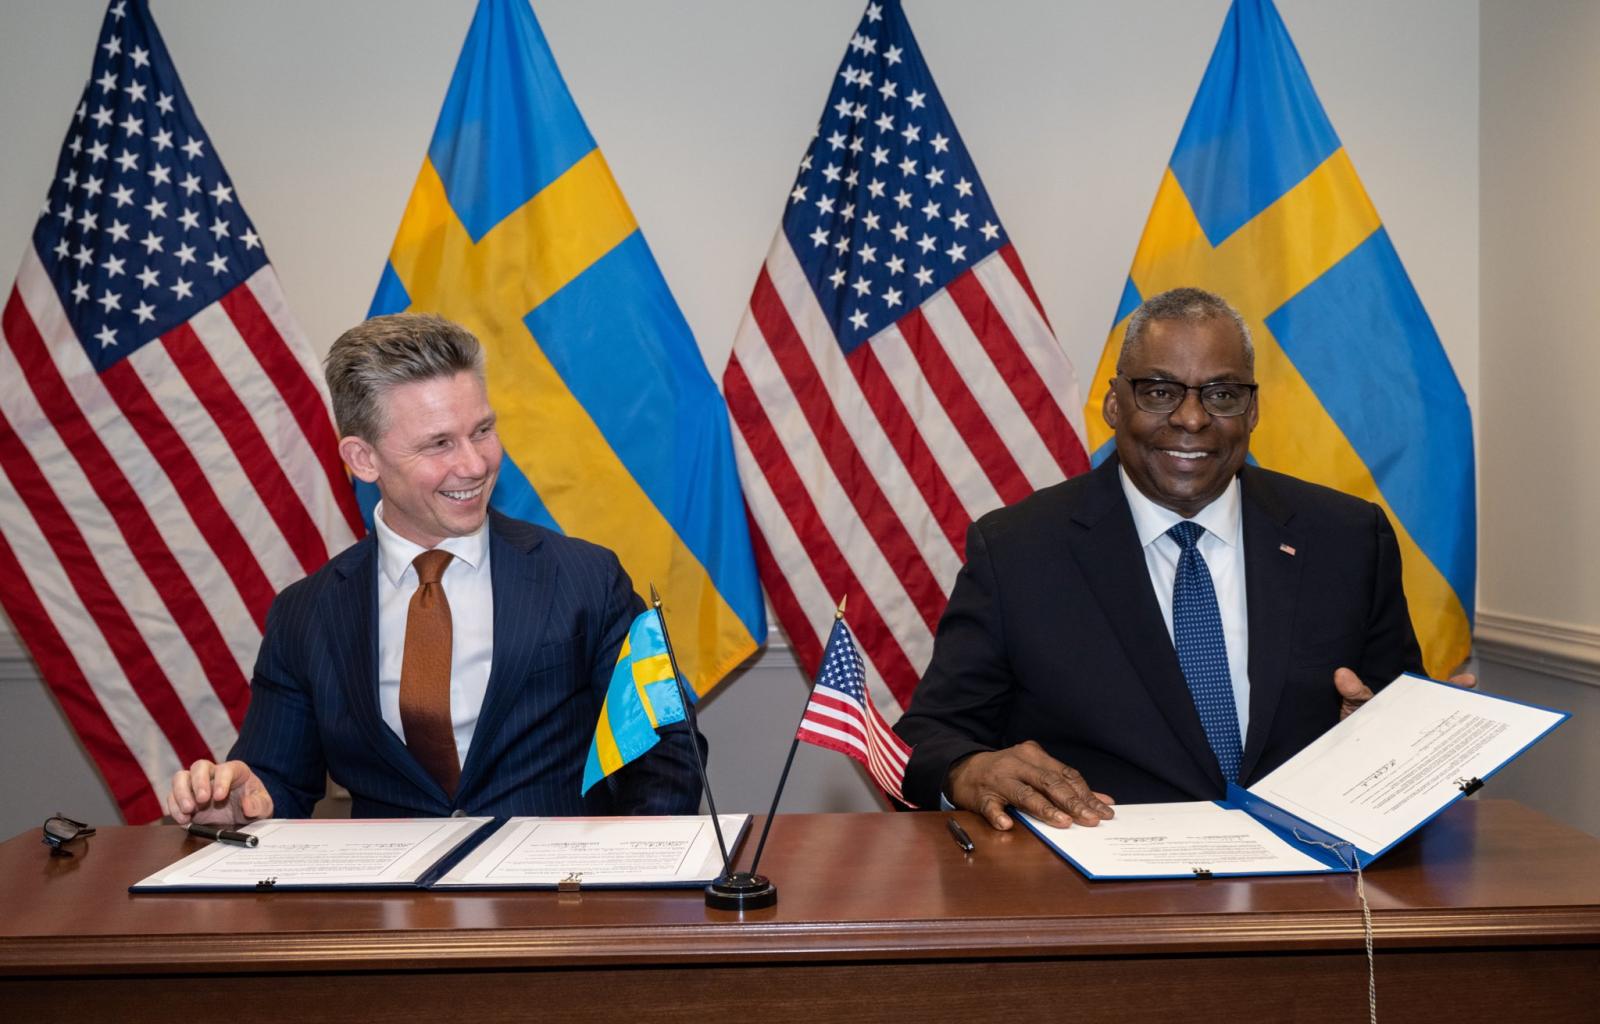 USA and Sweden have entered DCA-agreement